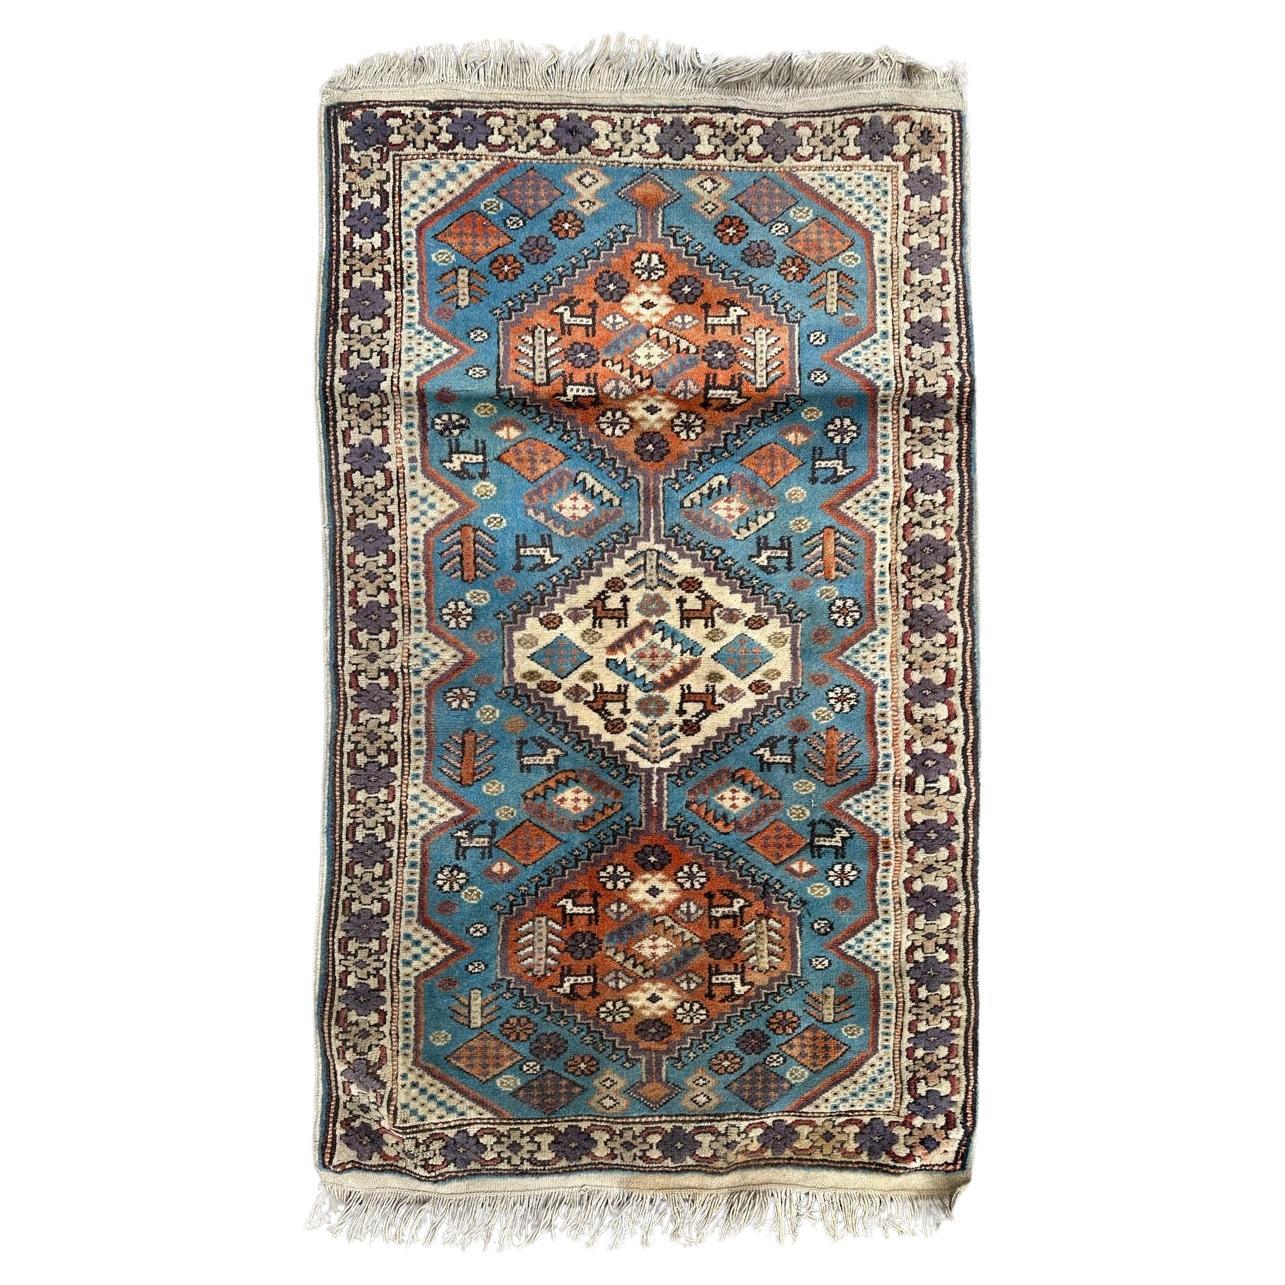 Bobyrug’s nice vintage Turkish rug For Sale